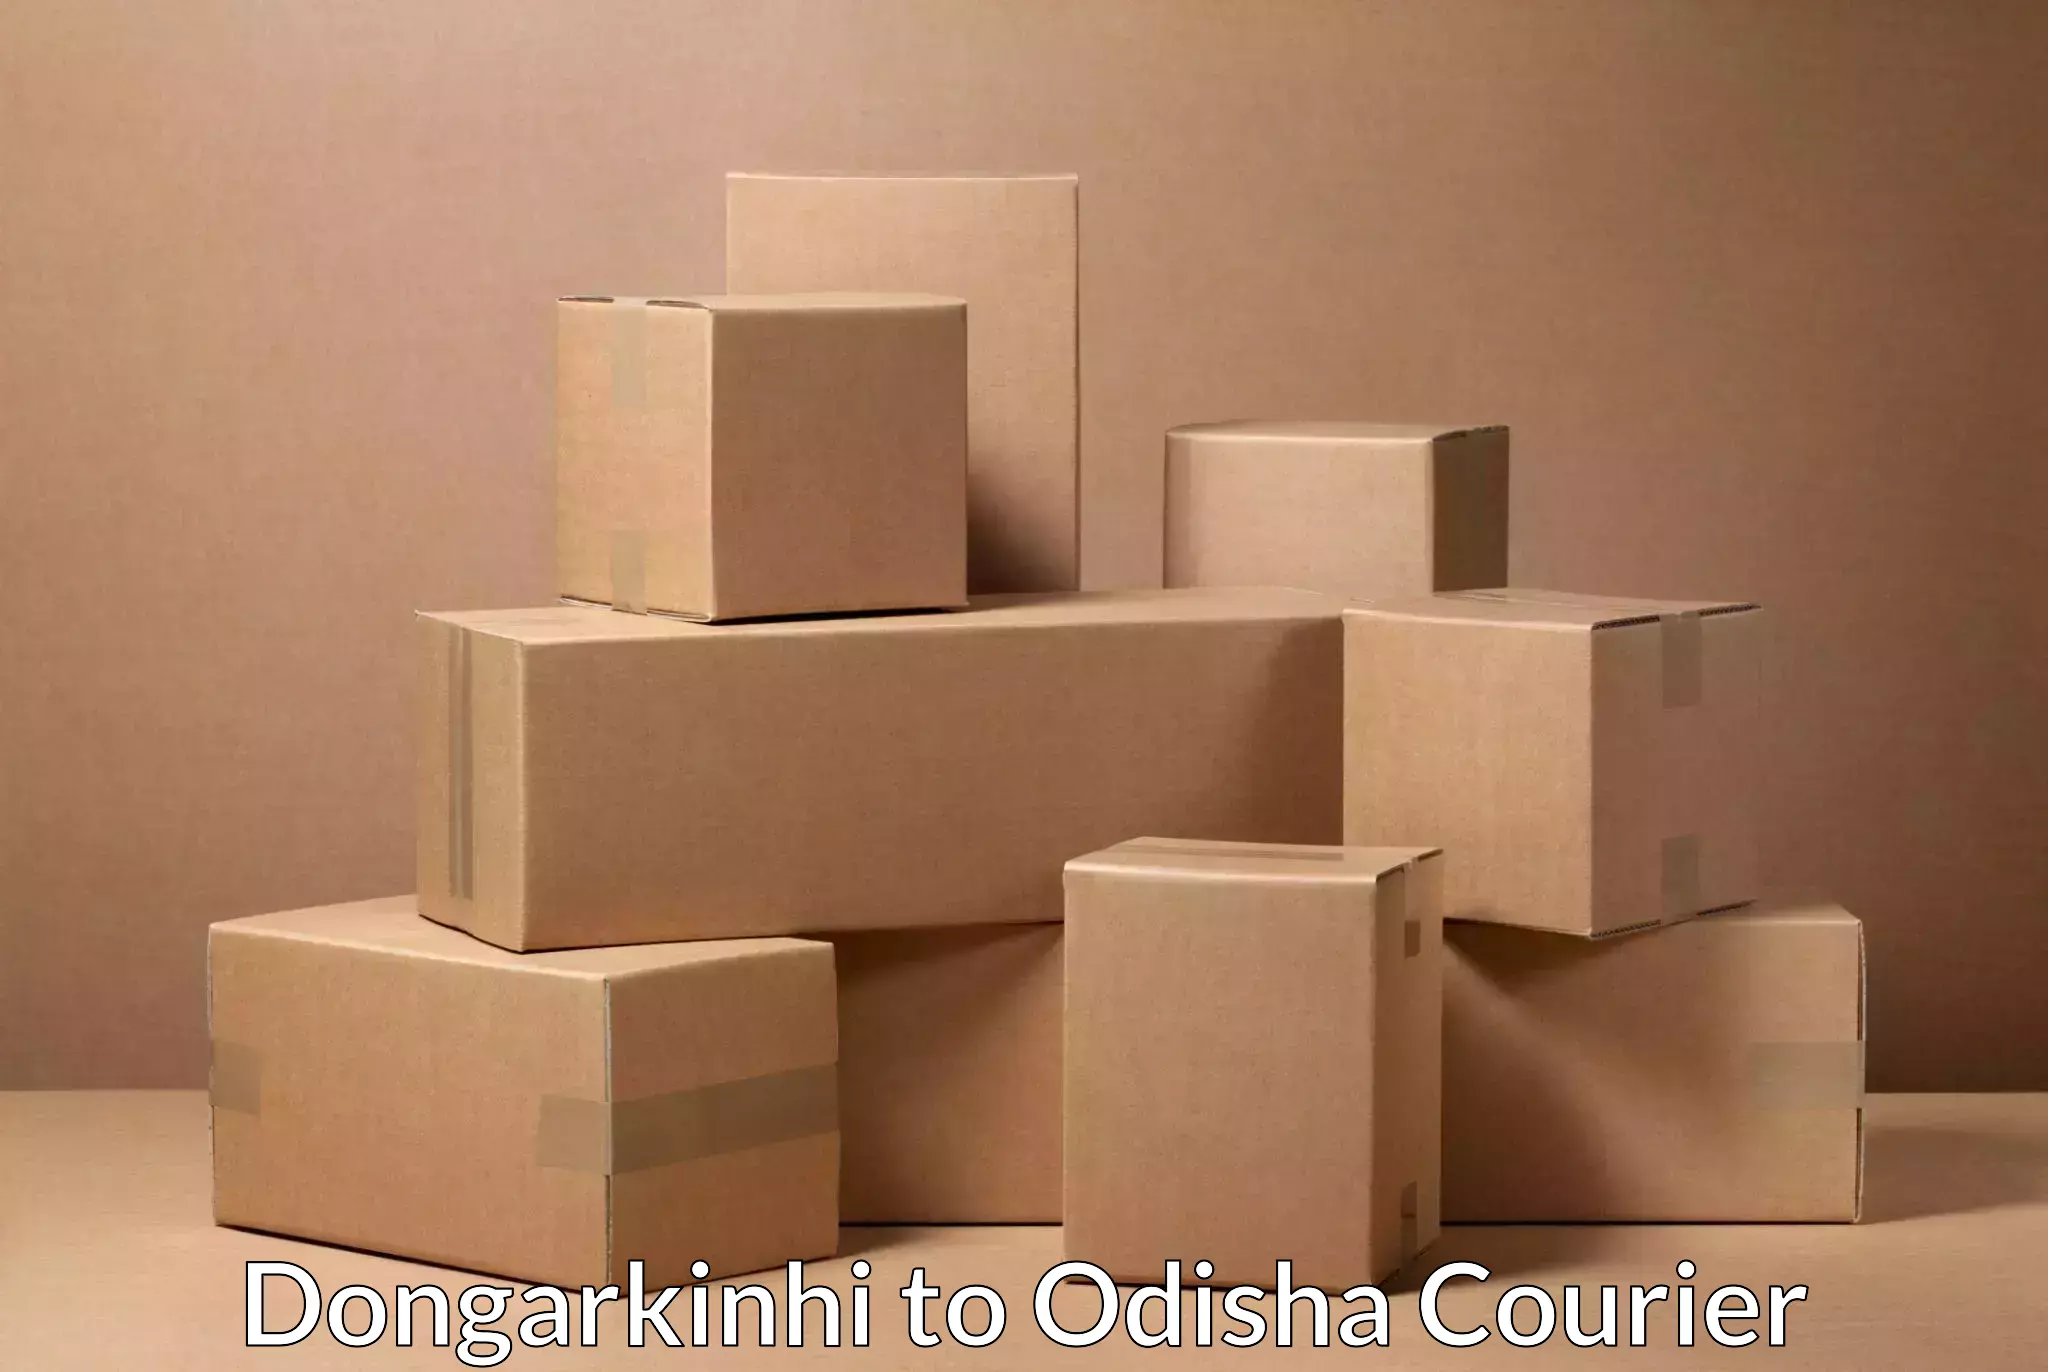 Global shipping networks Dongarkinhi to Odisha